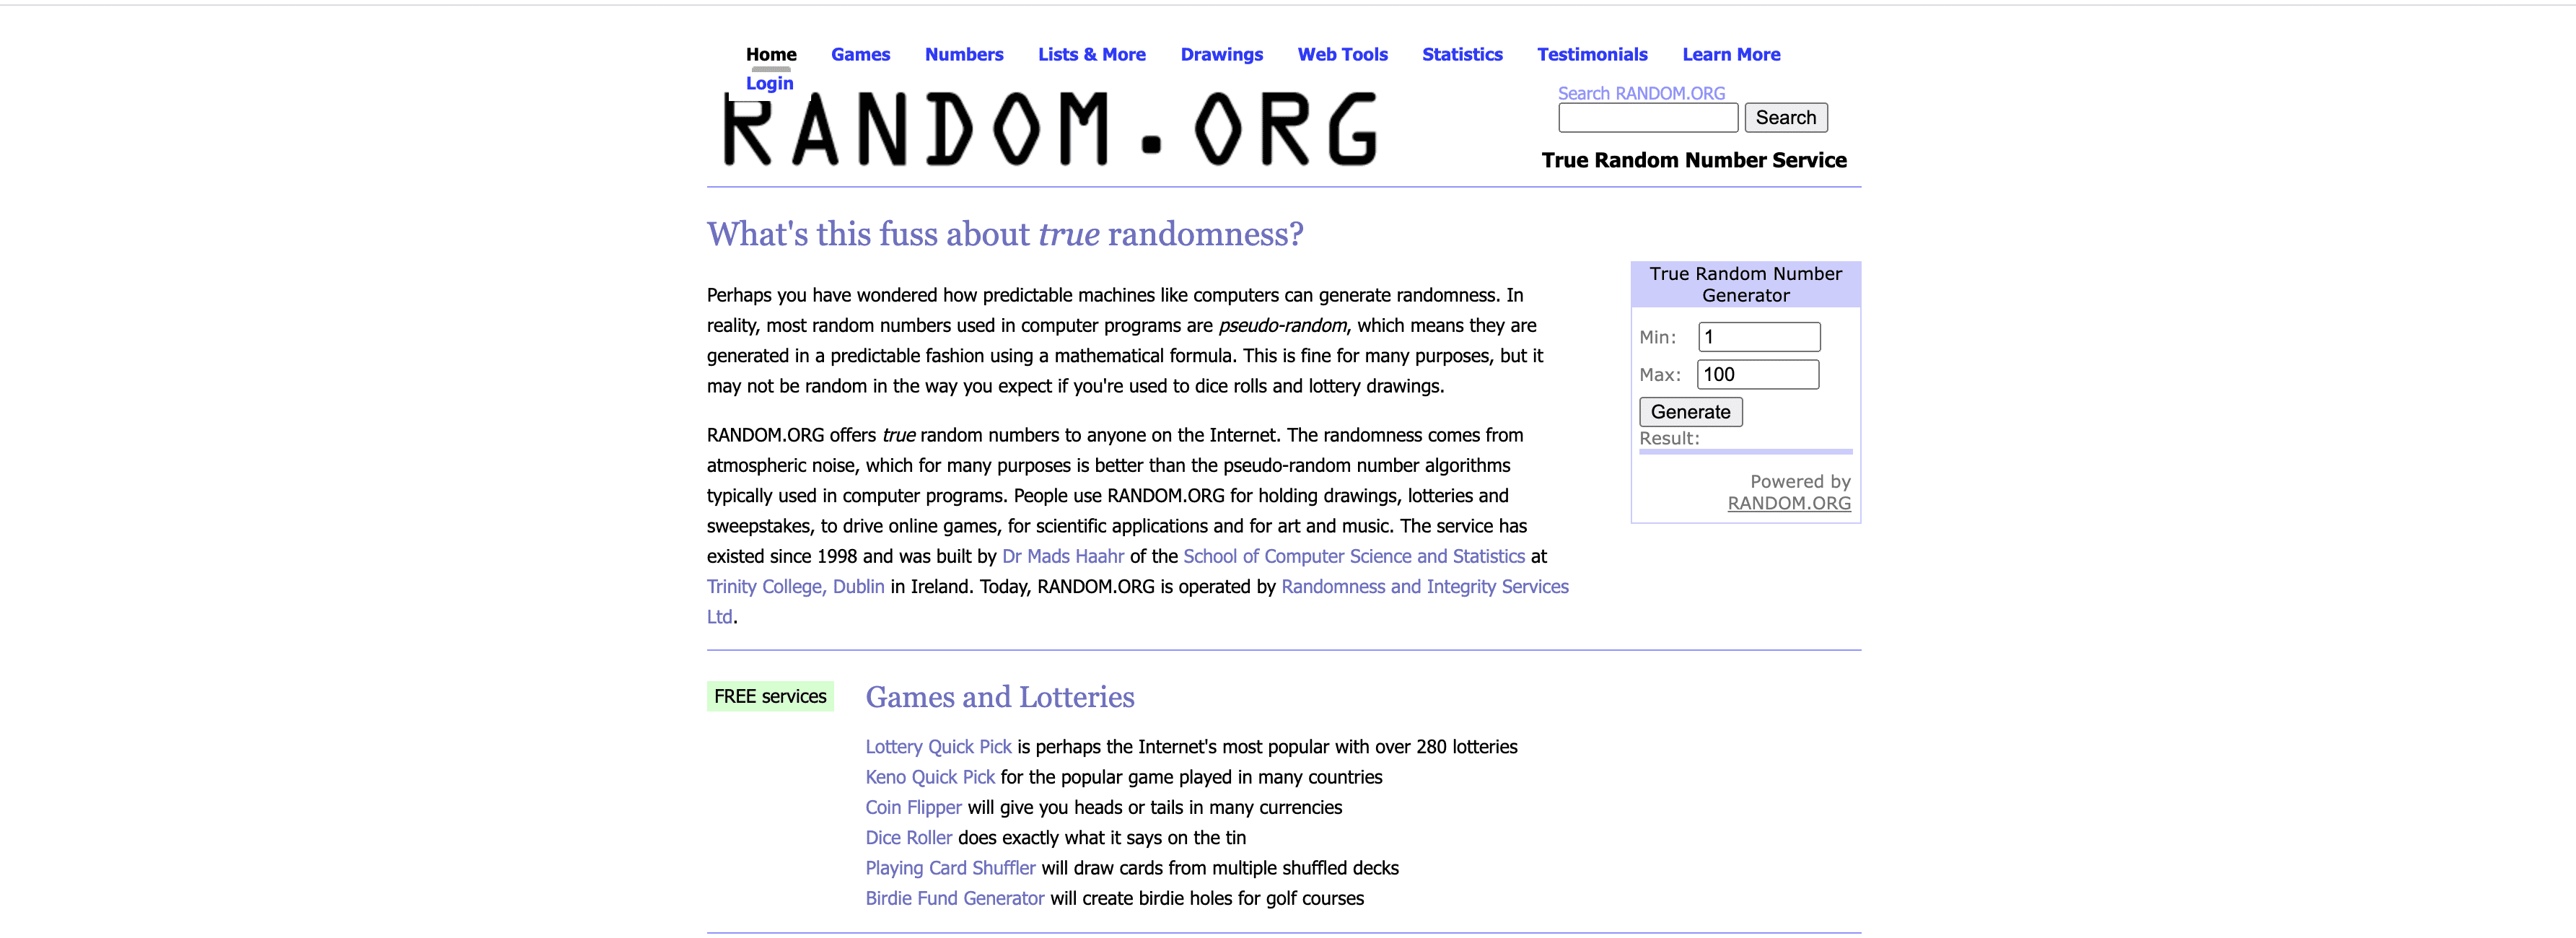 Random.org